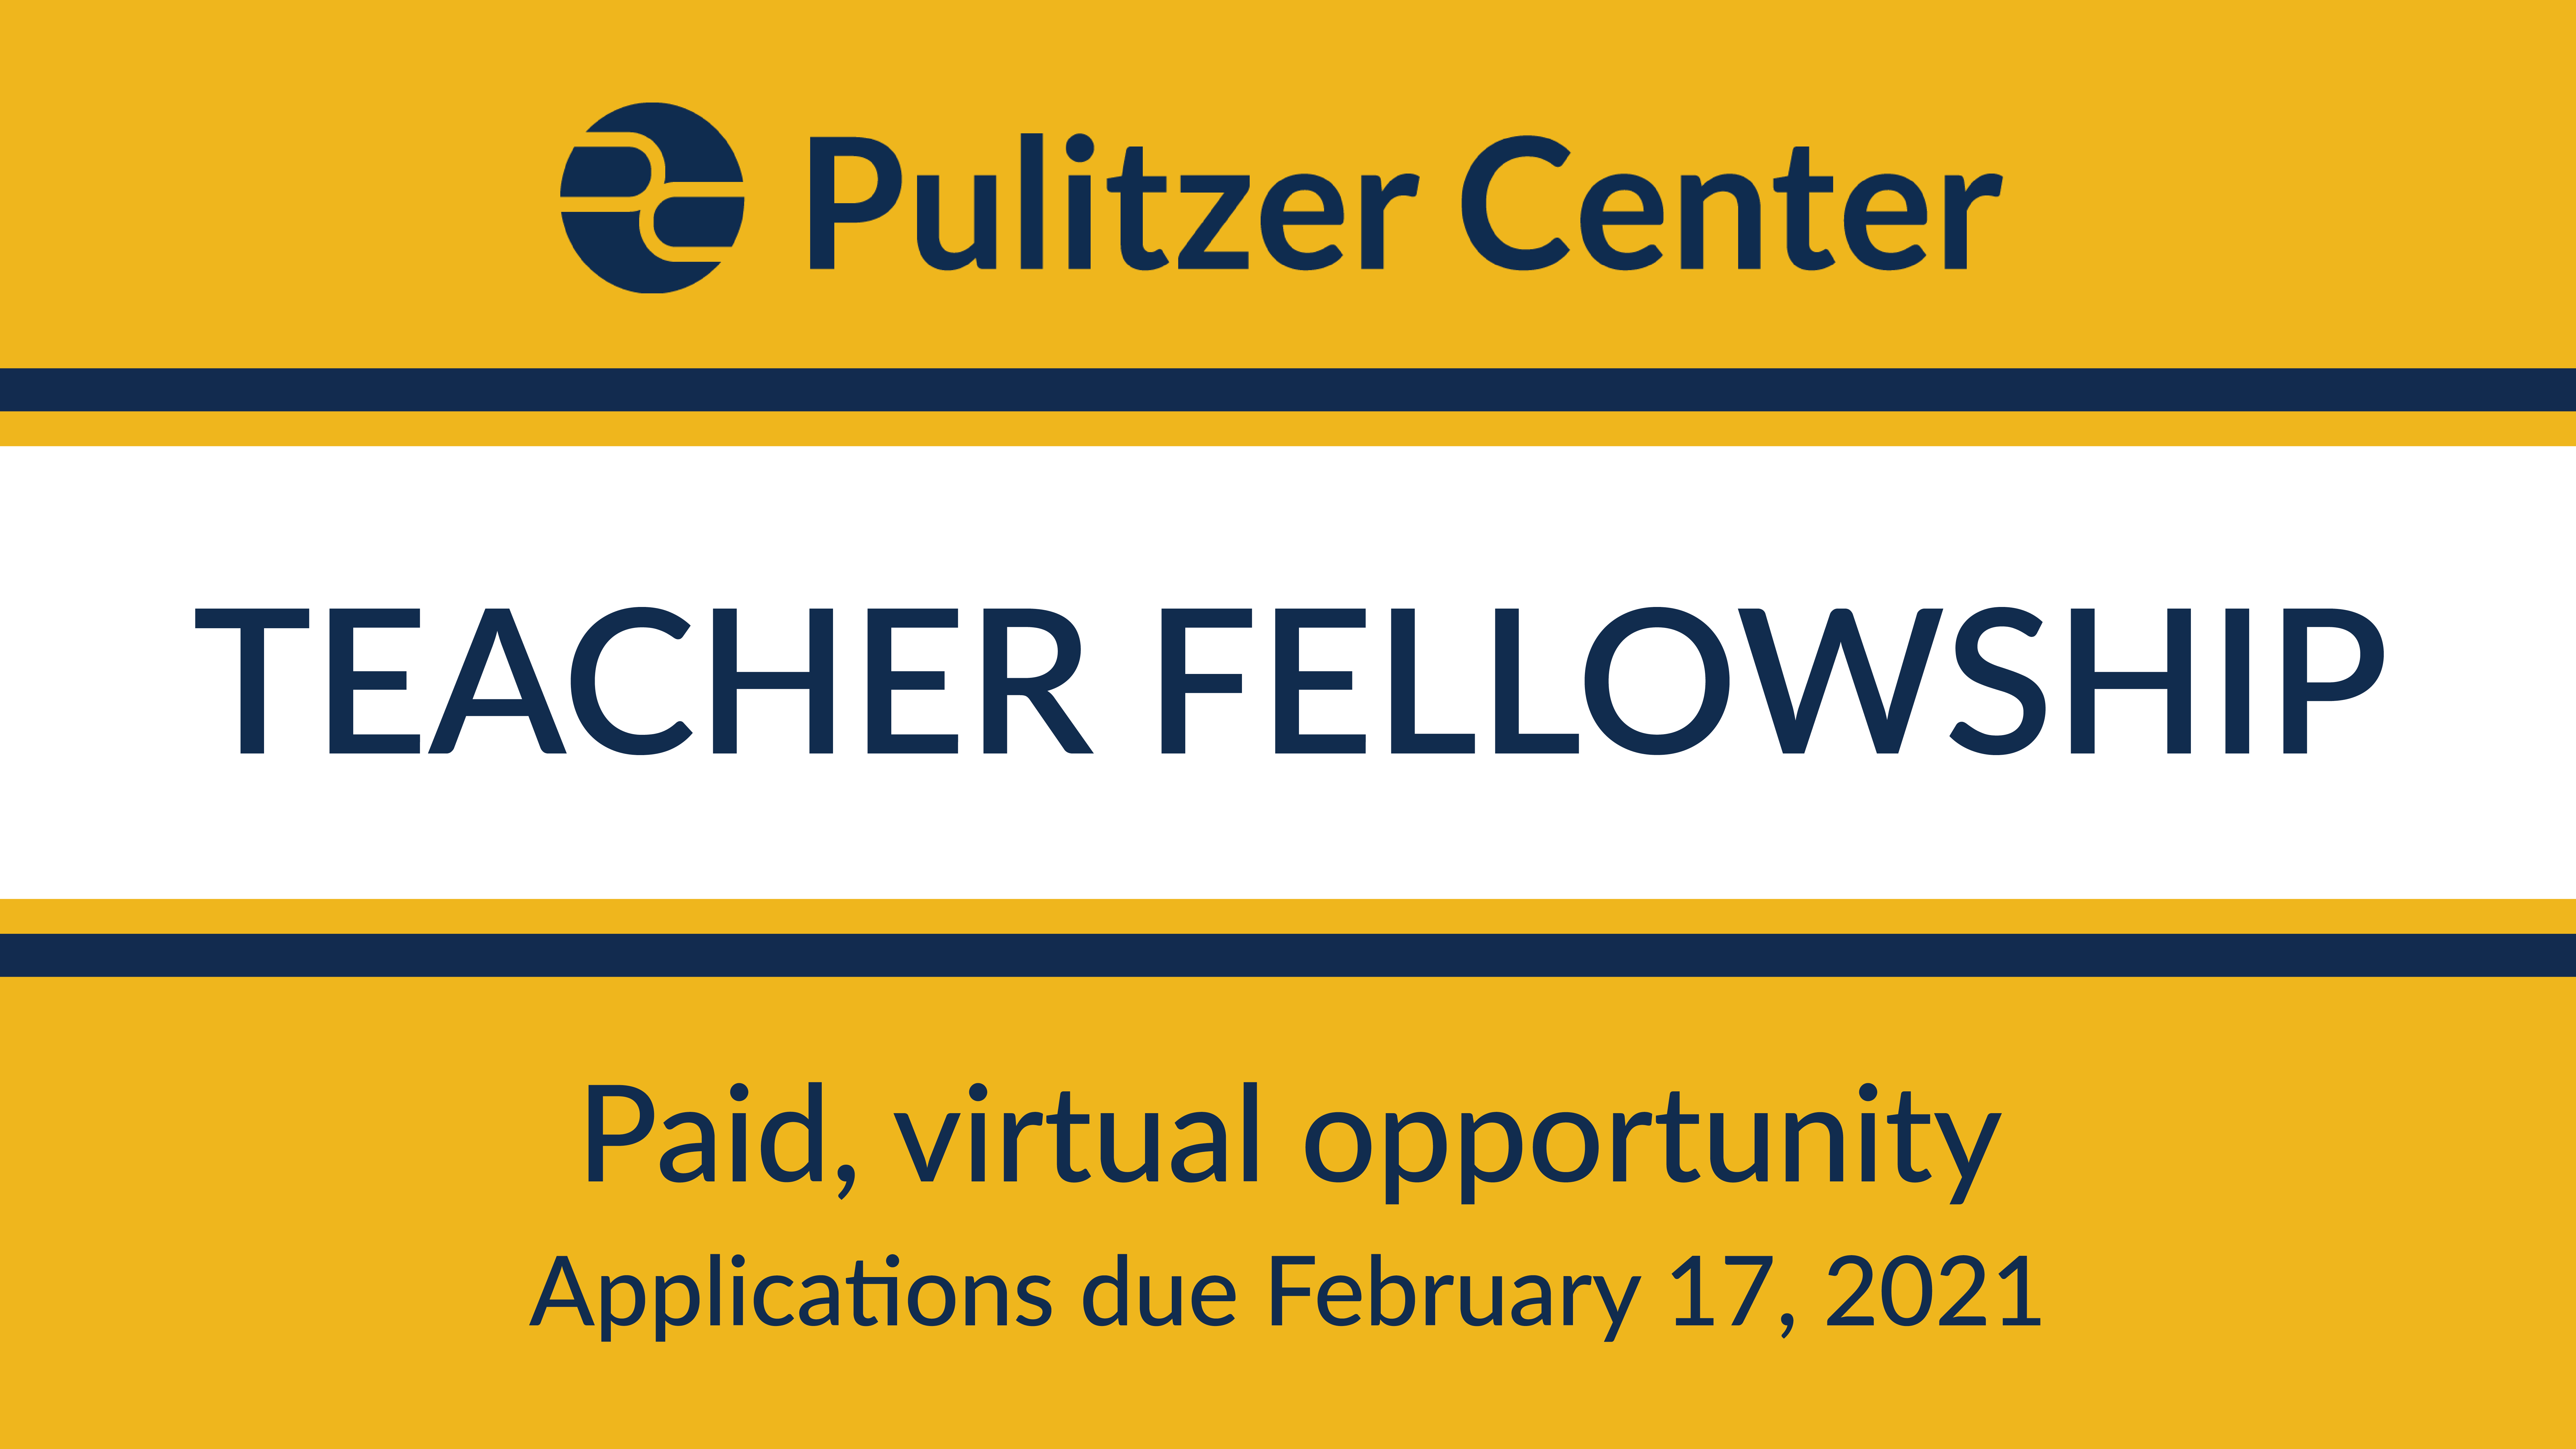 Apply now for the spring 2021 Pulitzer Center Teacher Fellowship!